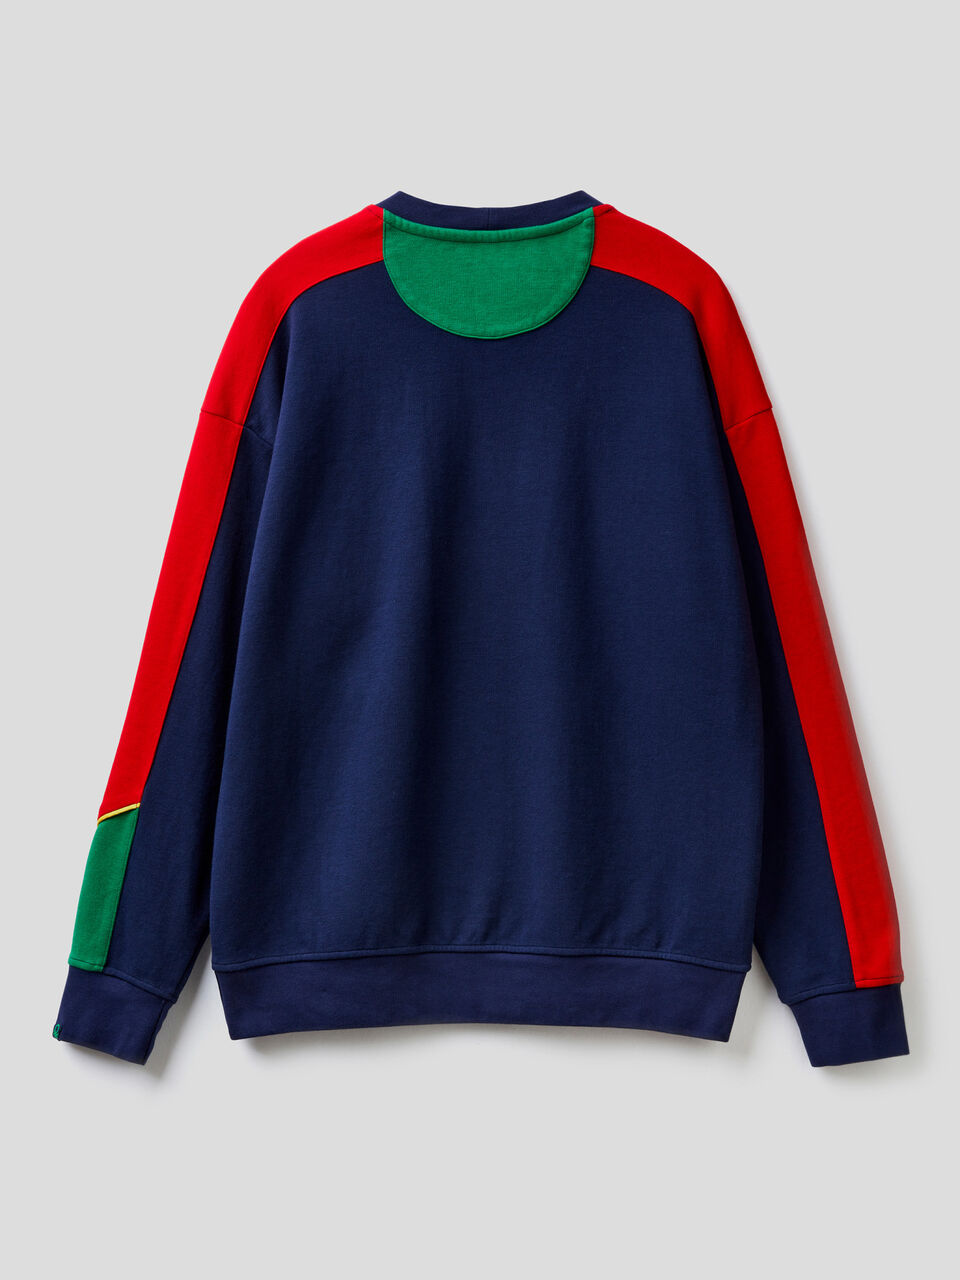 Sweatshirt with kangaroo pocket | Benetton Blue - Dark